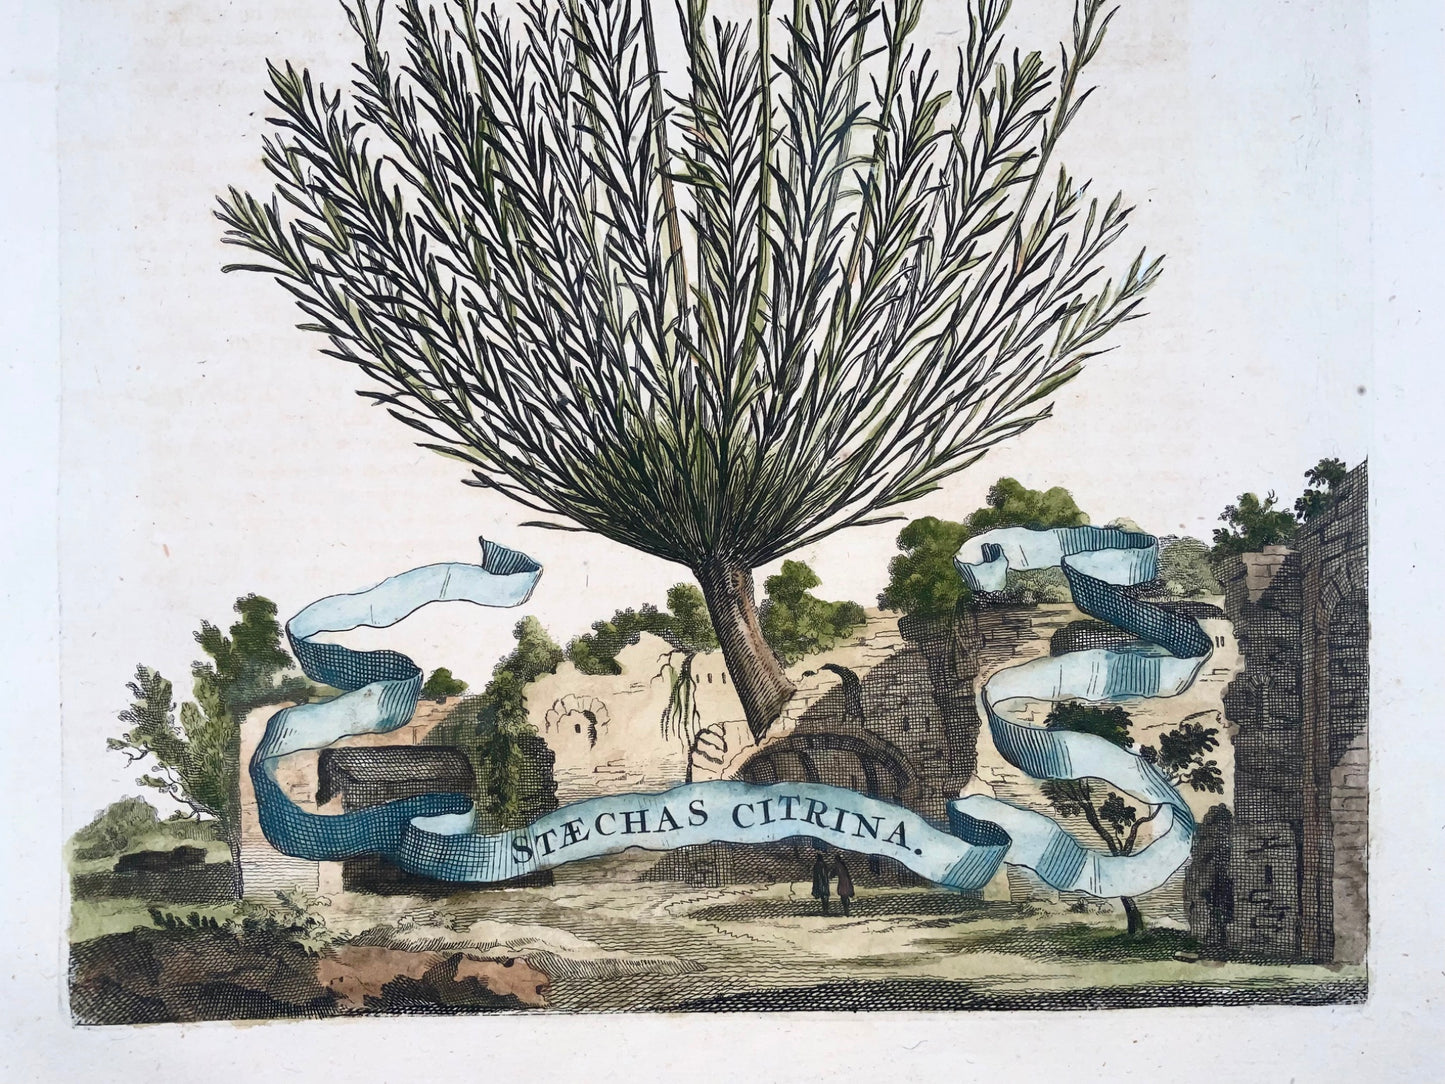 1696 Stachys Citrina, grand folio, botanique, Abraham Munting, grand folio